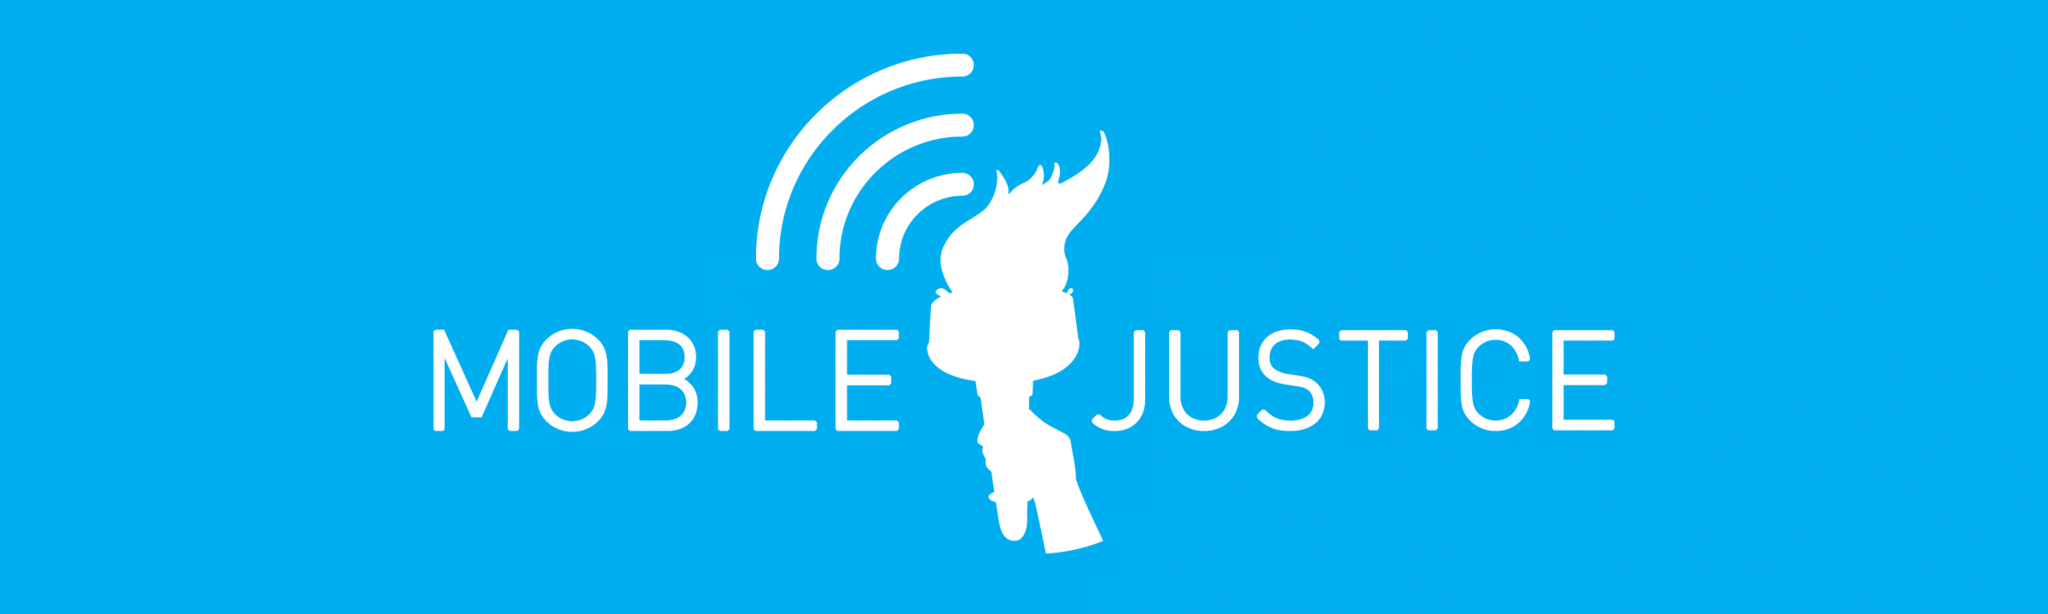 Mobile Justice app